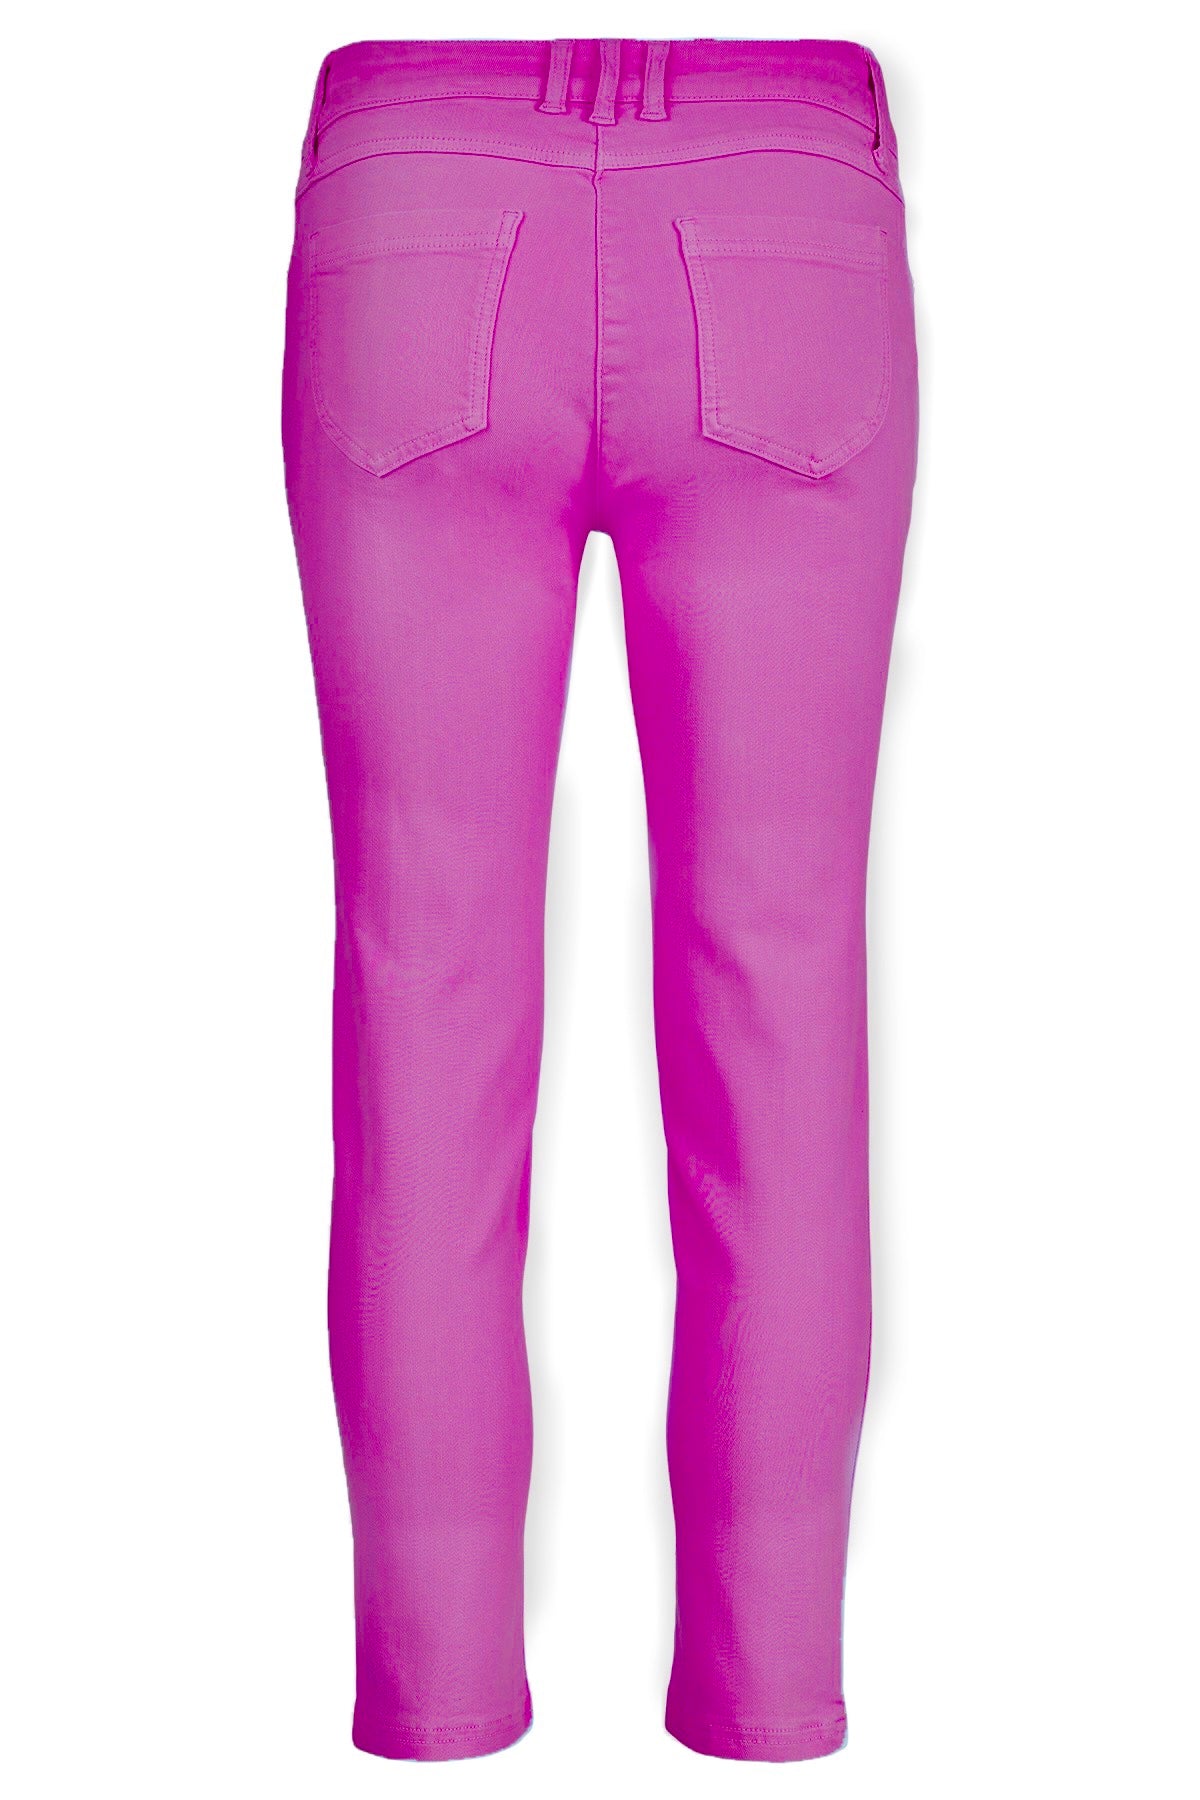 Eleana Hot Pink Jeans